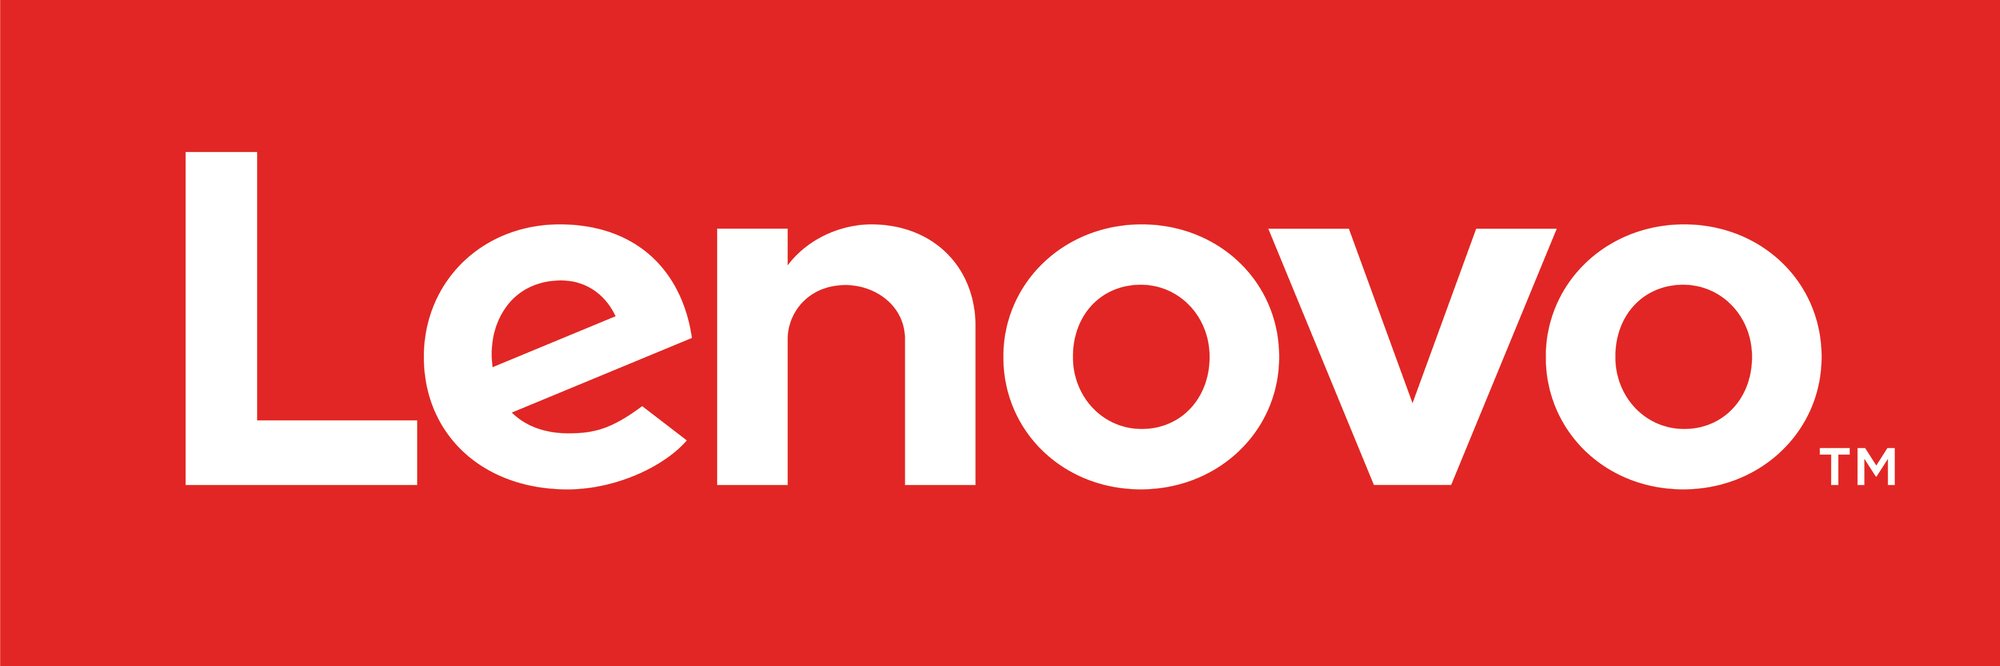 Lenovo Logo Red - Horizontal